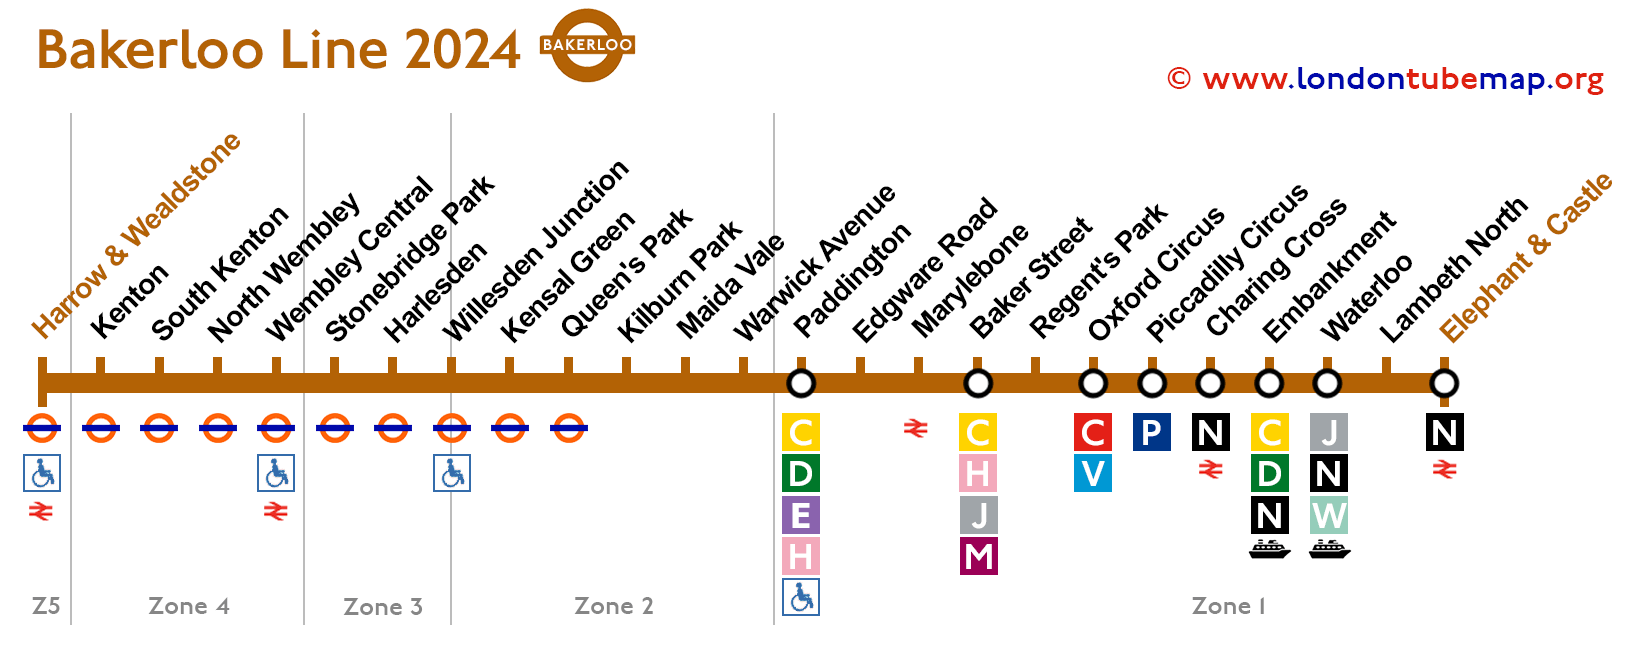 Bakerloo line map 2024